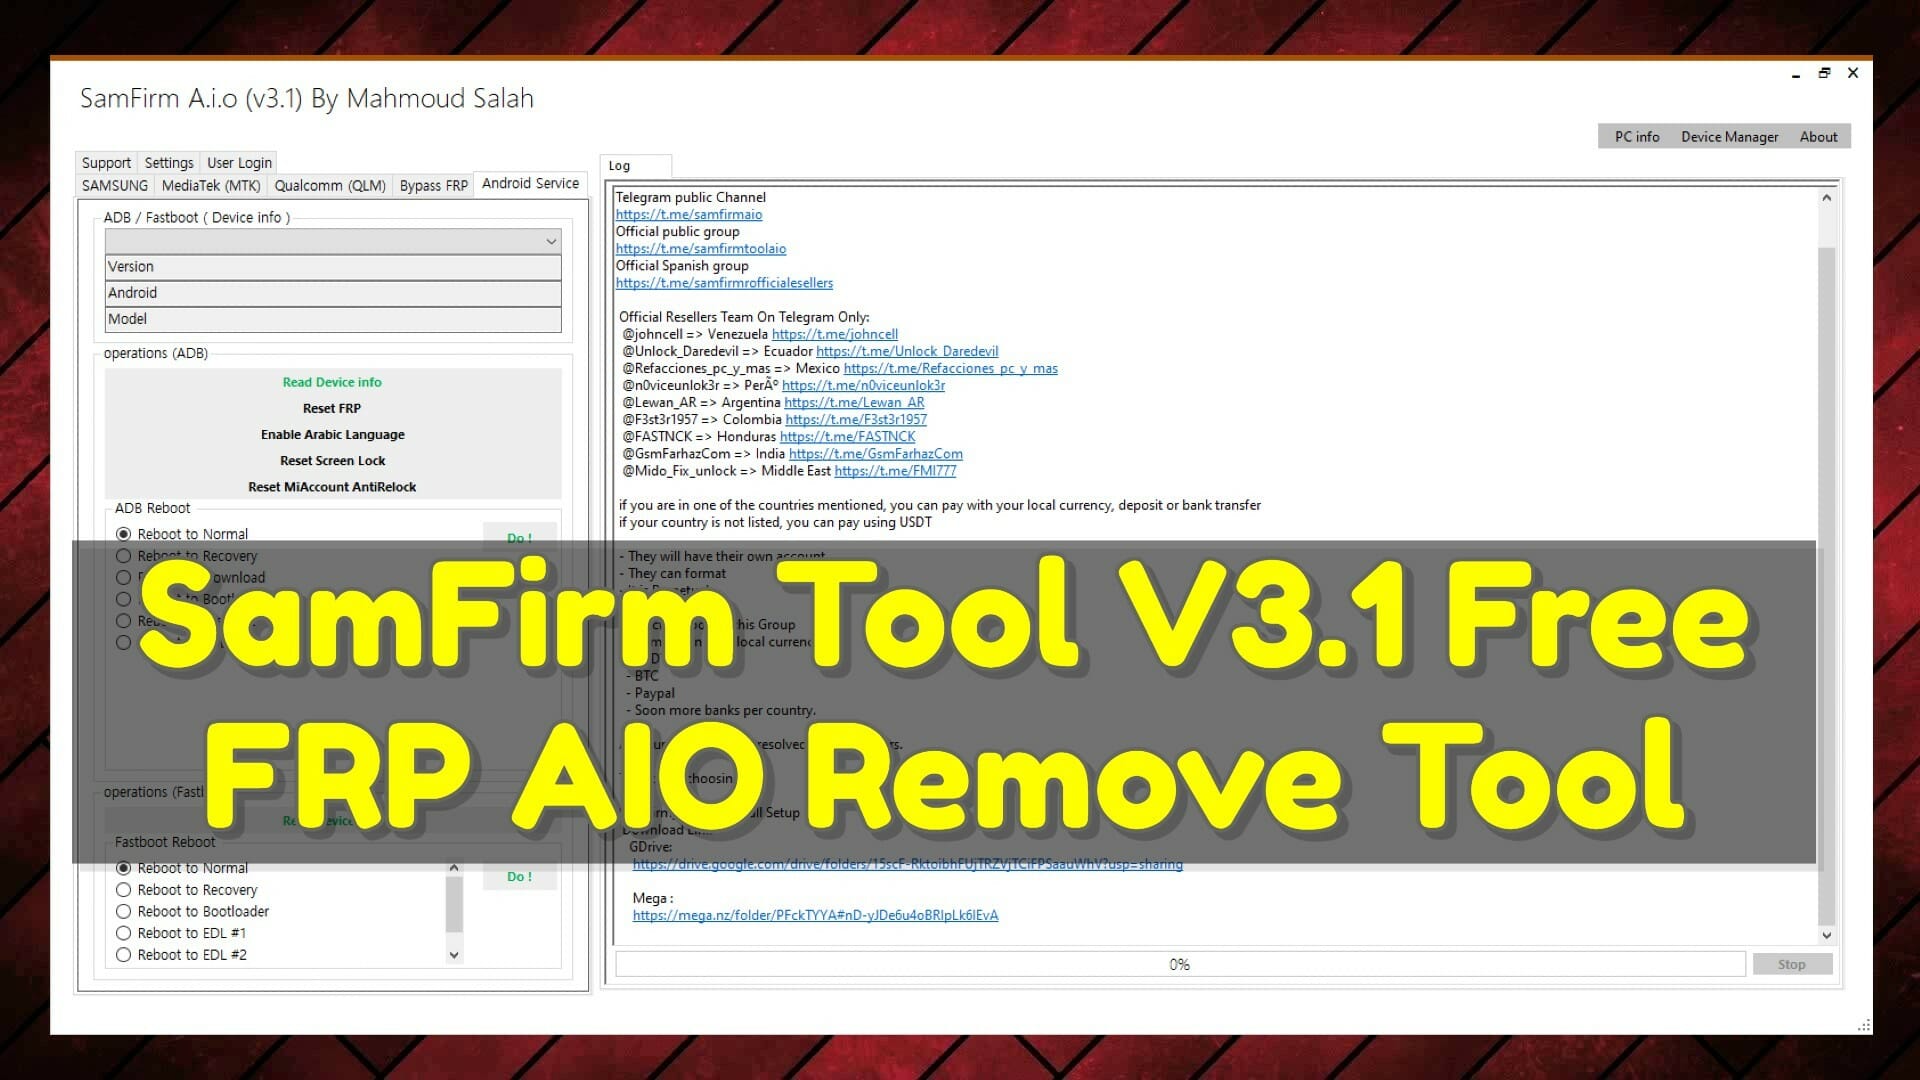 Download SamFirm Tool V3.1 Free FRP AIO Remove Tool